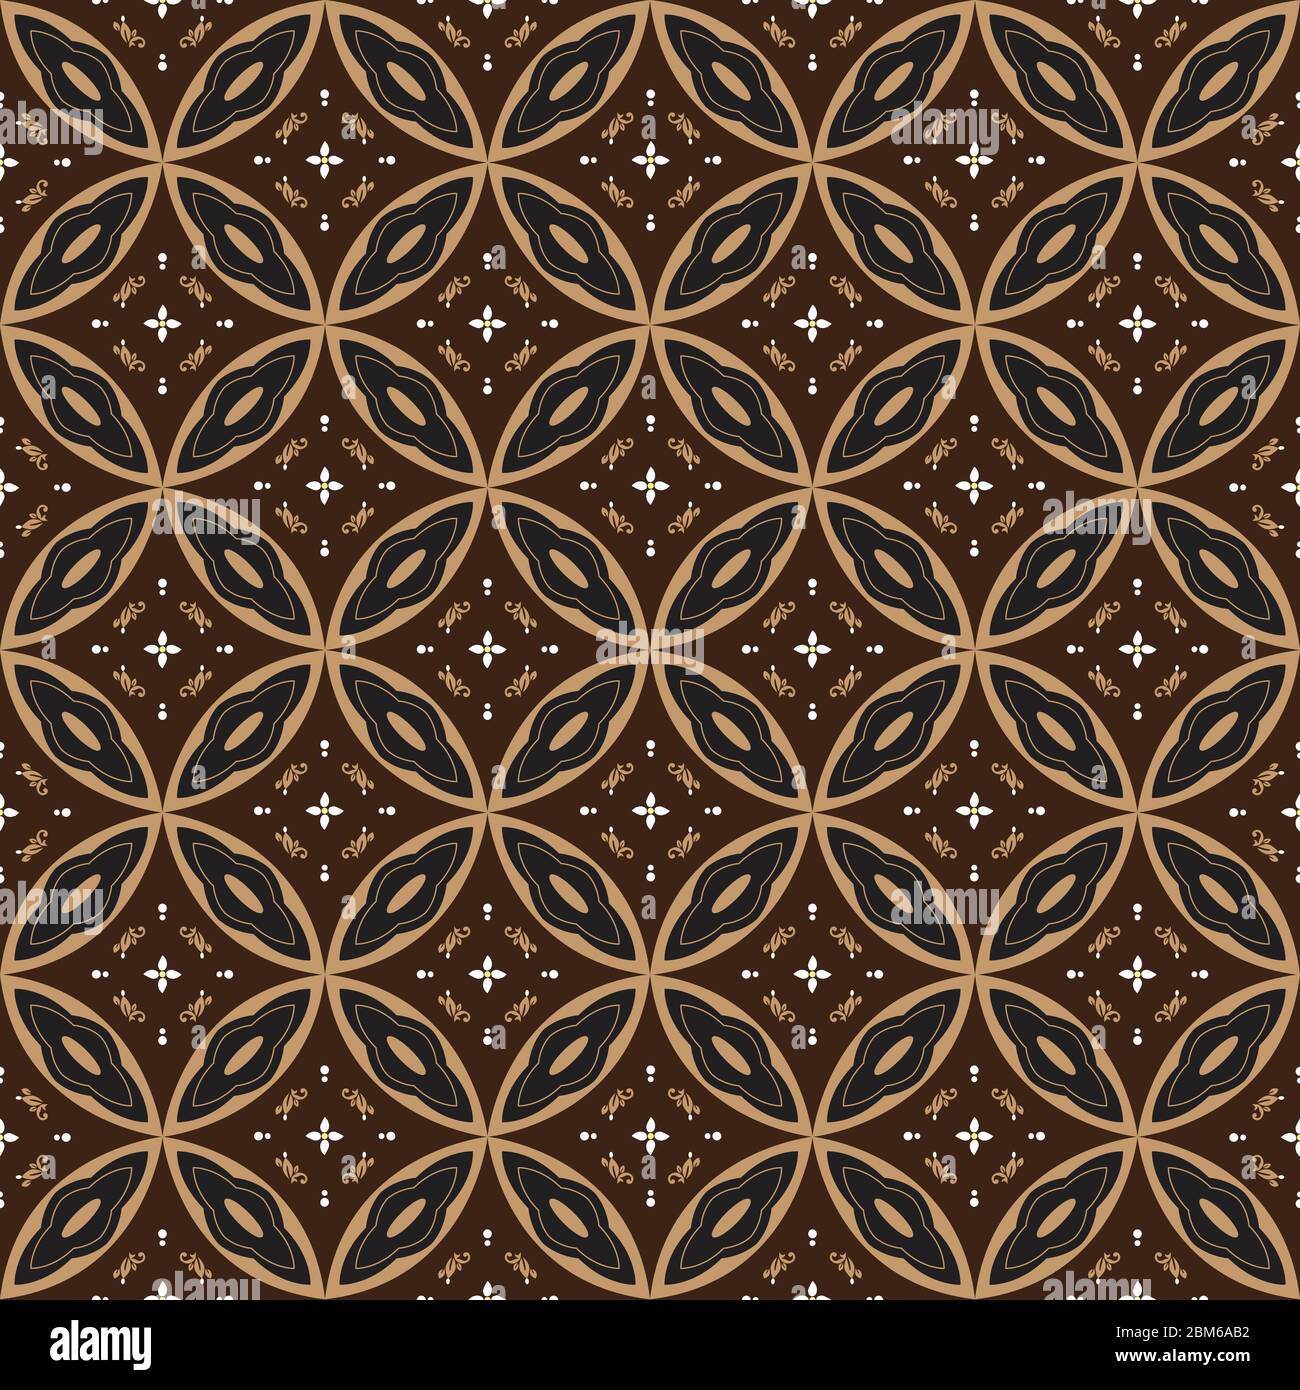 Art work modern circle motifs on batik design with simple brown color design Stock Vector